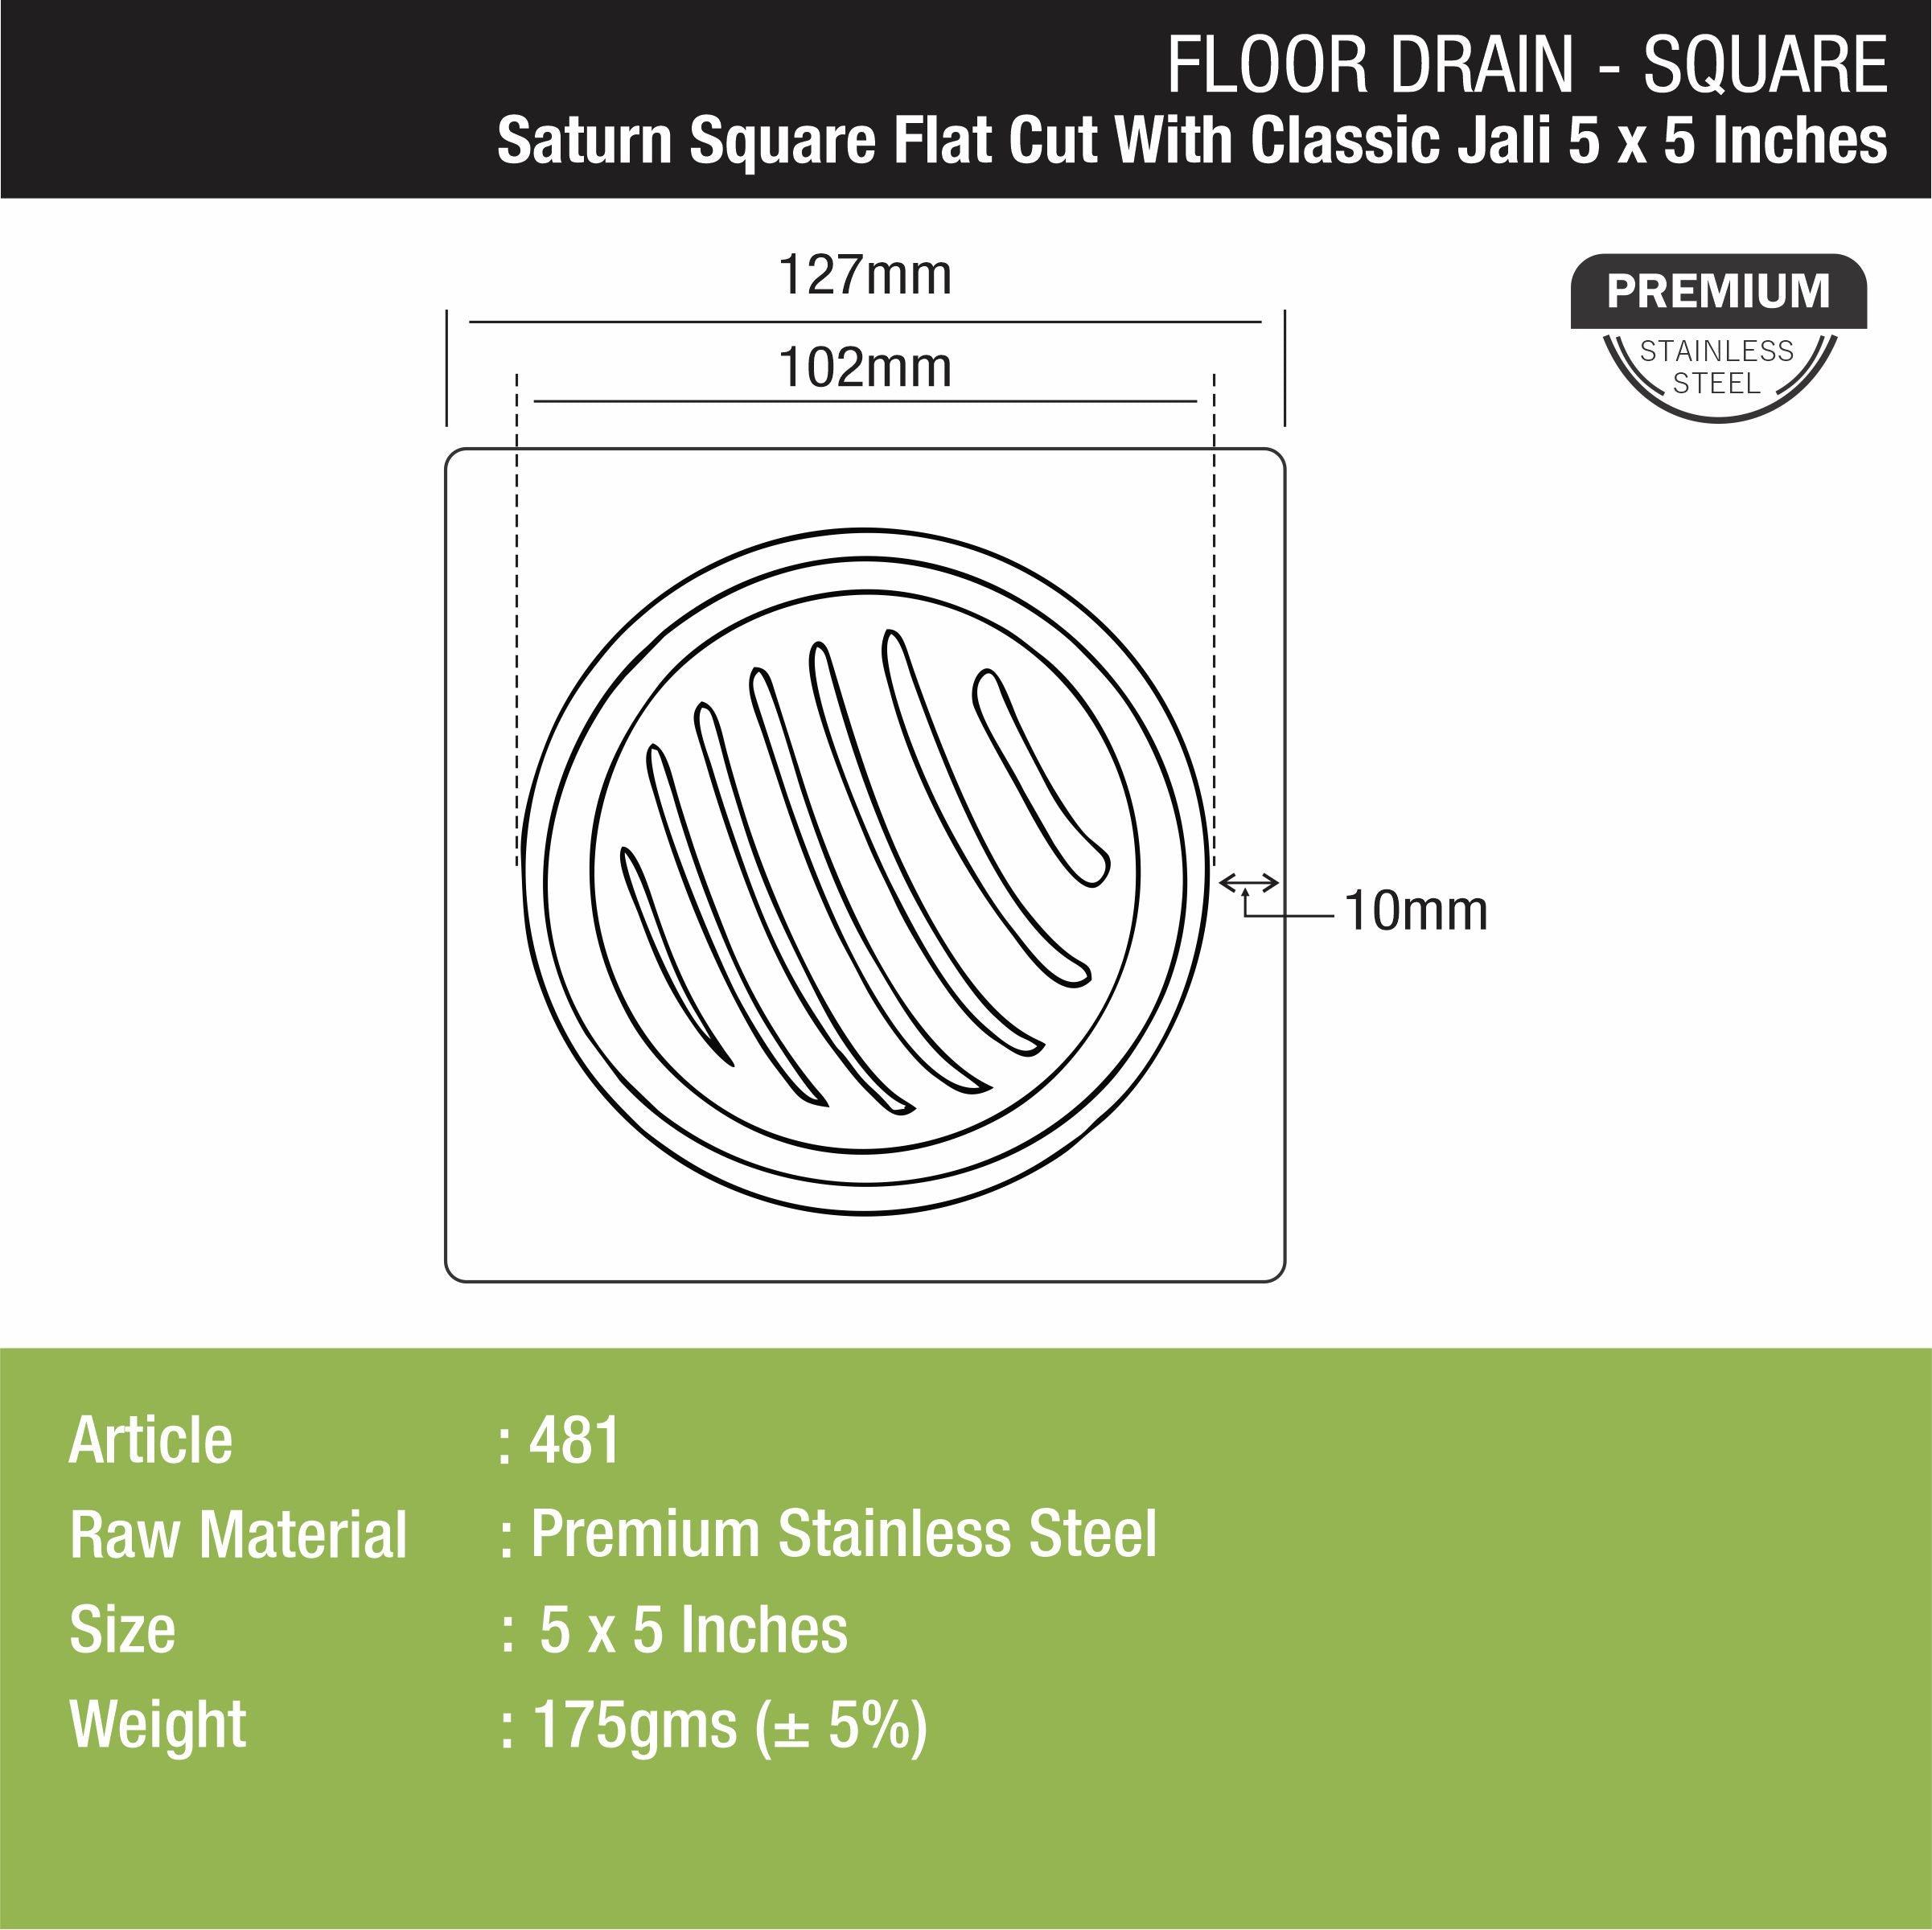 Saturn Square Flat Cut Floor Drain with Classic Jali (5 x 5 Inches) - LIPKA - Lipka Home